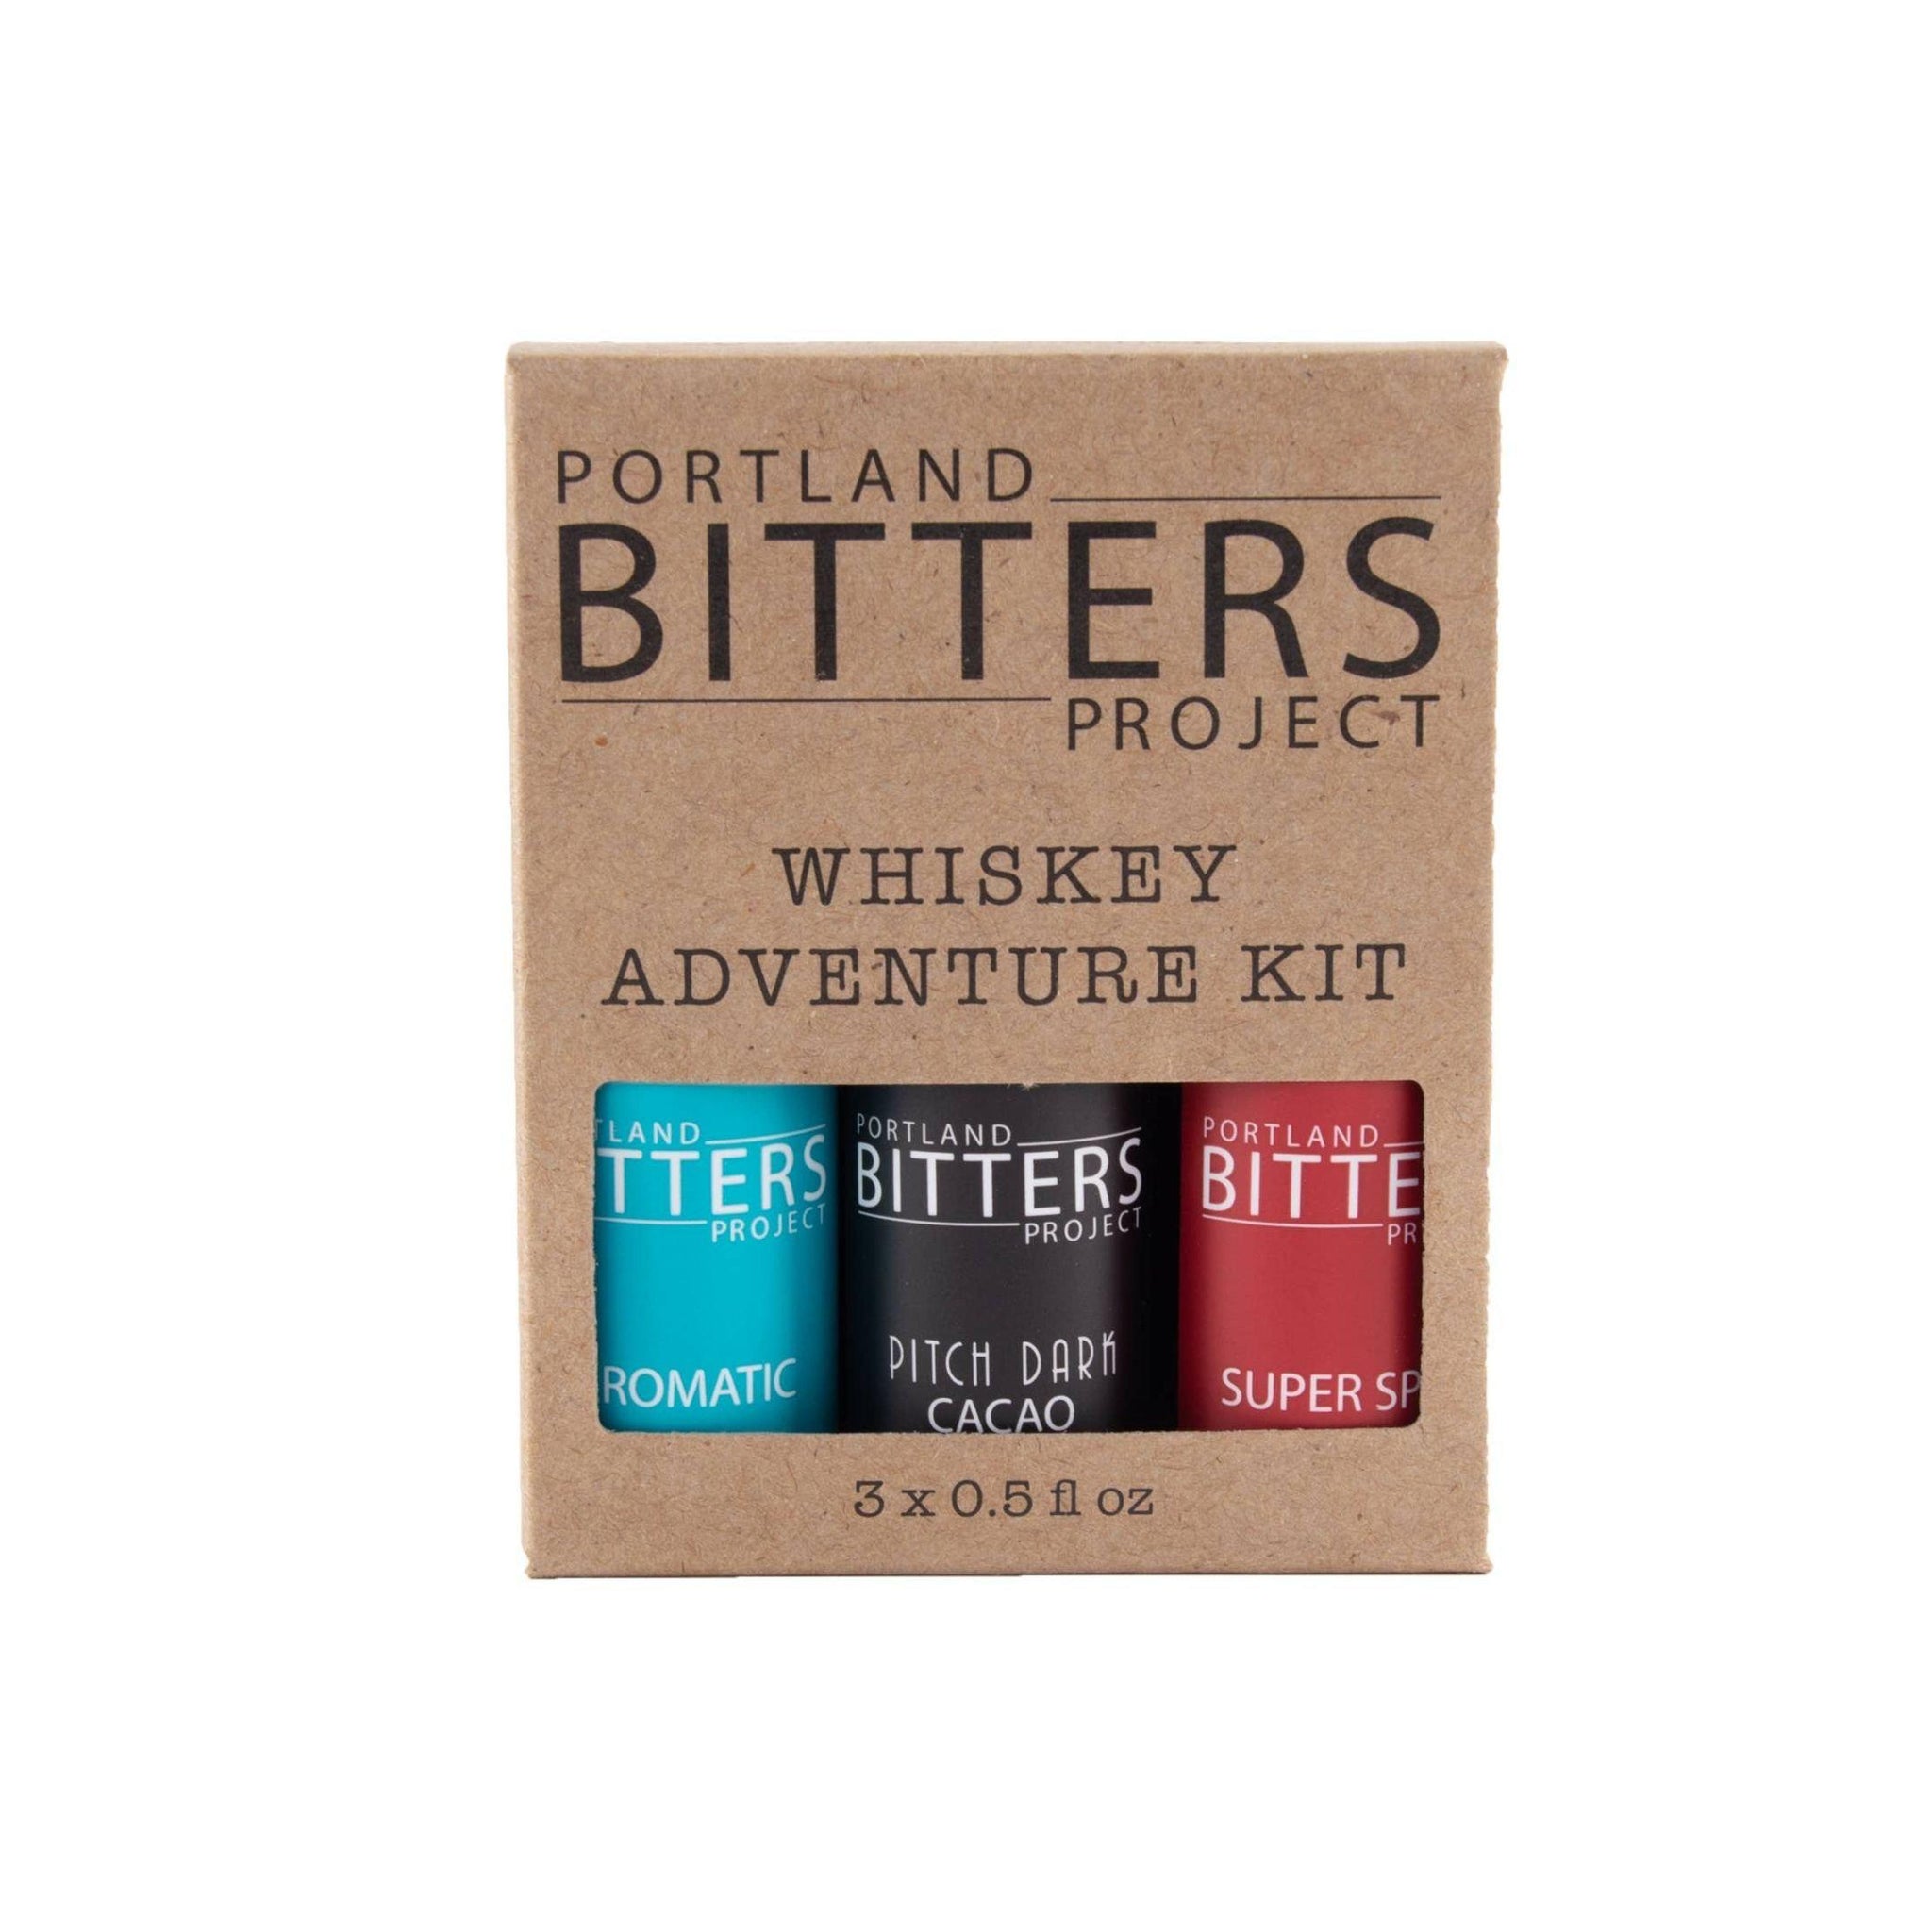 Portland Bitters Project Whiskey Bitters Adventure Kit